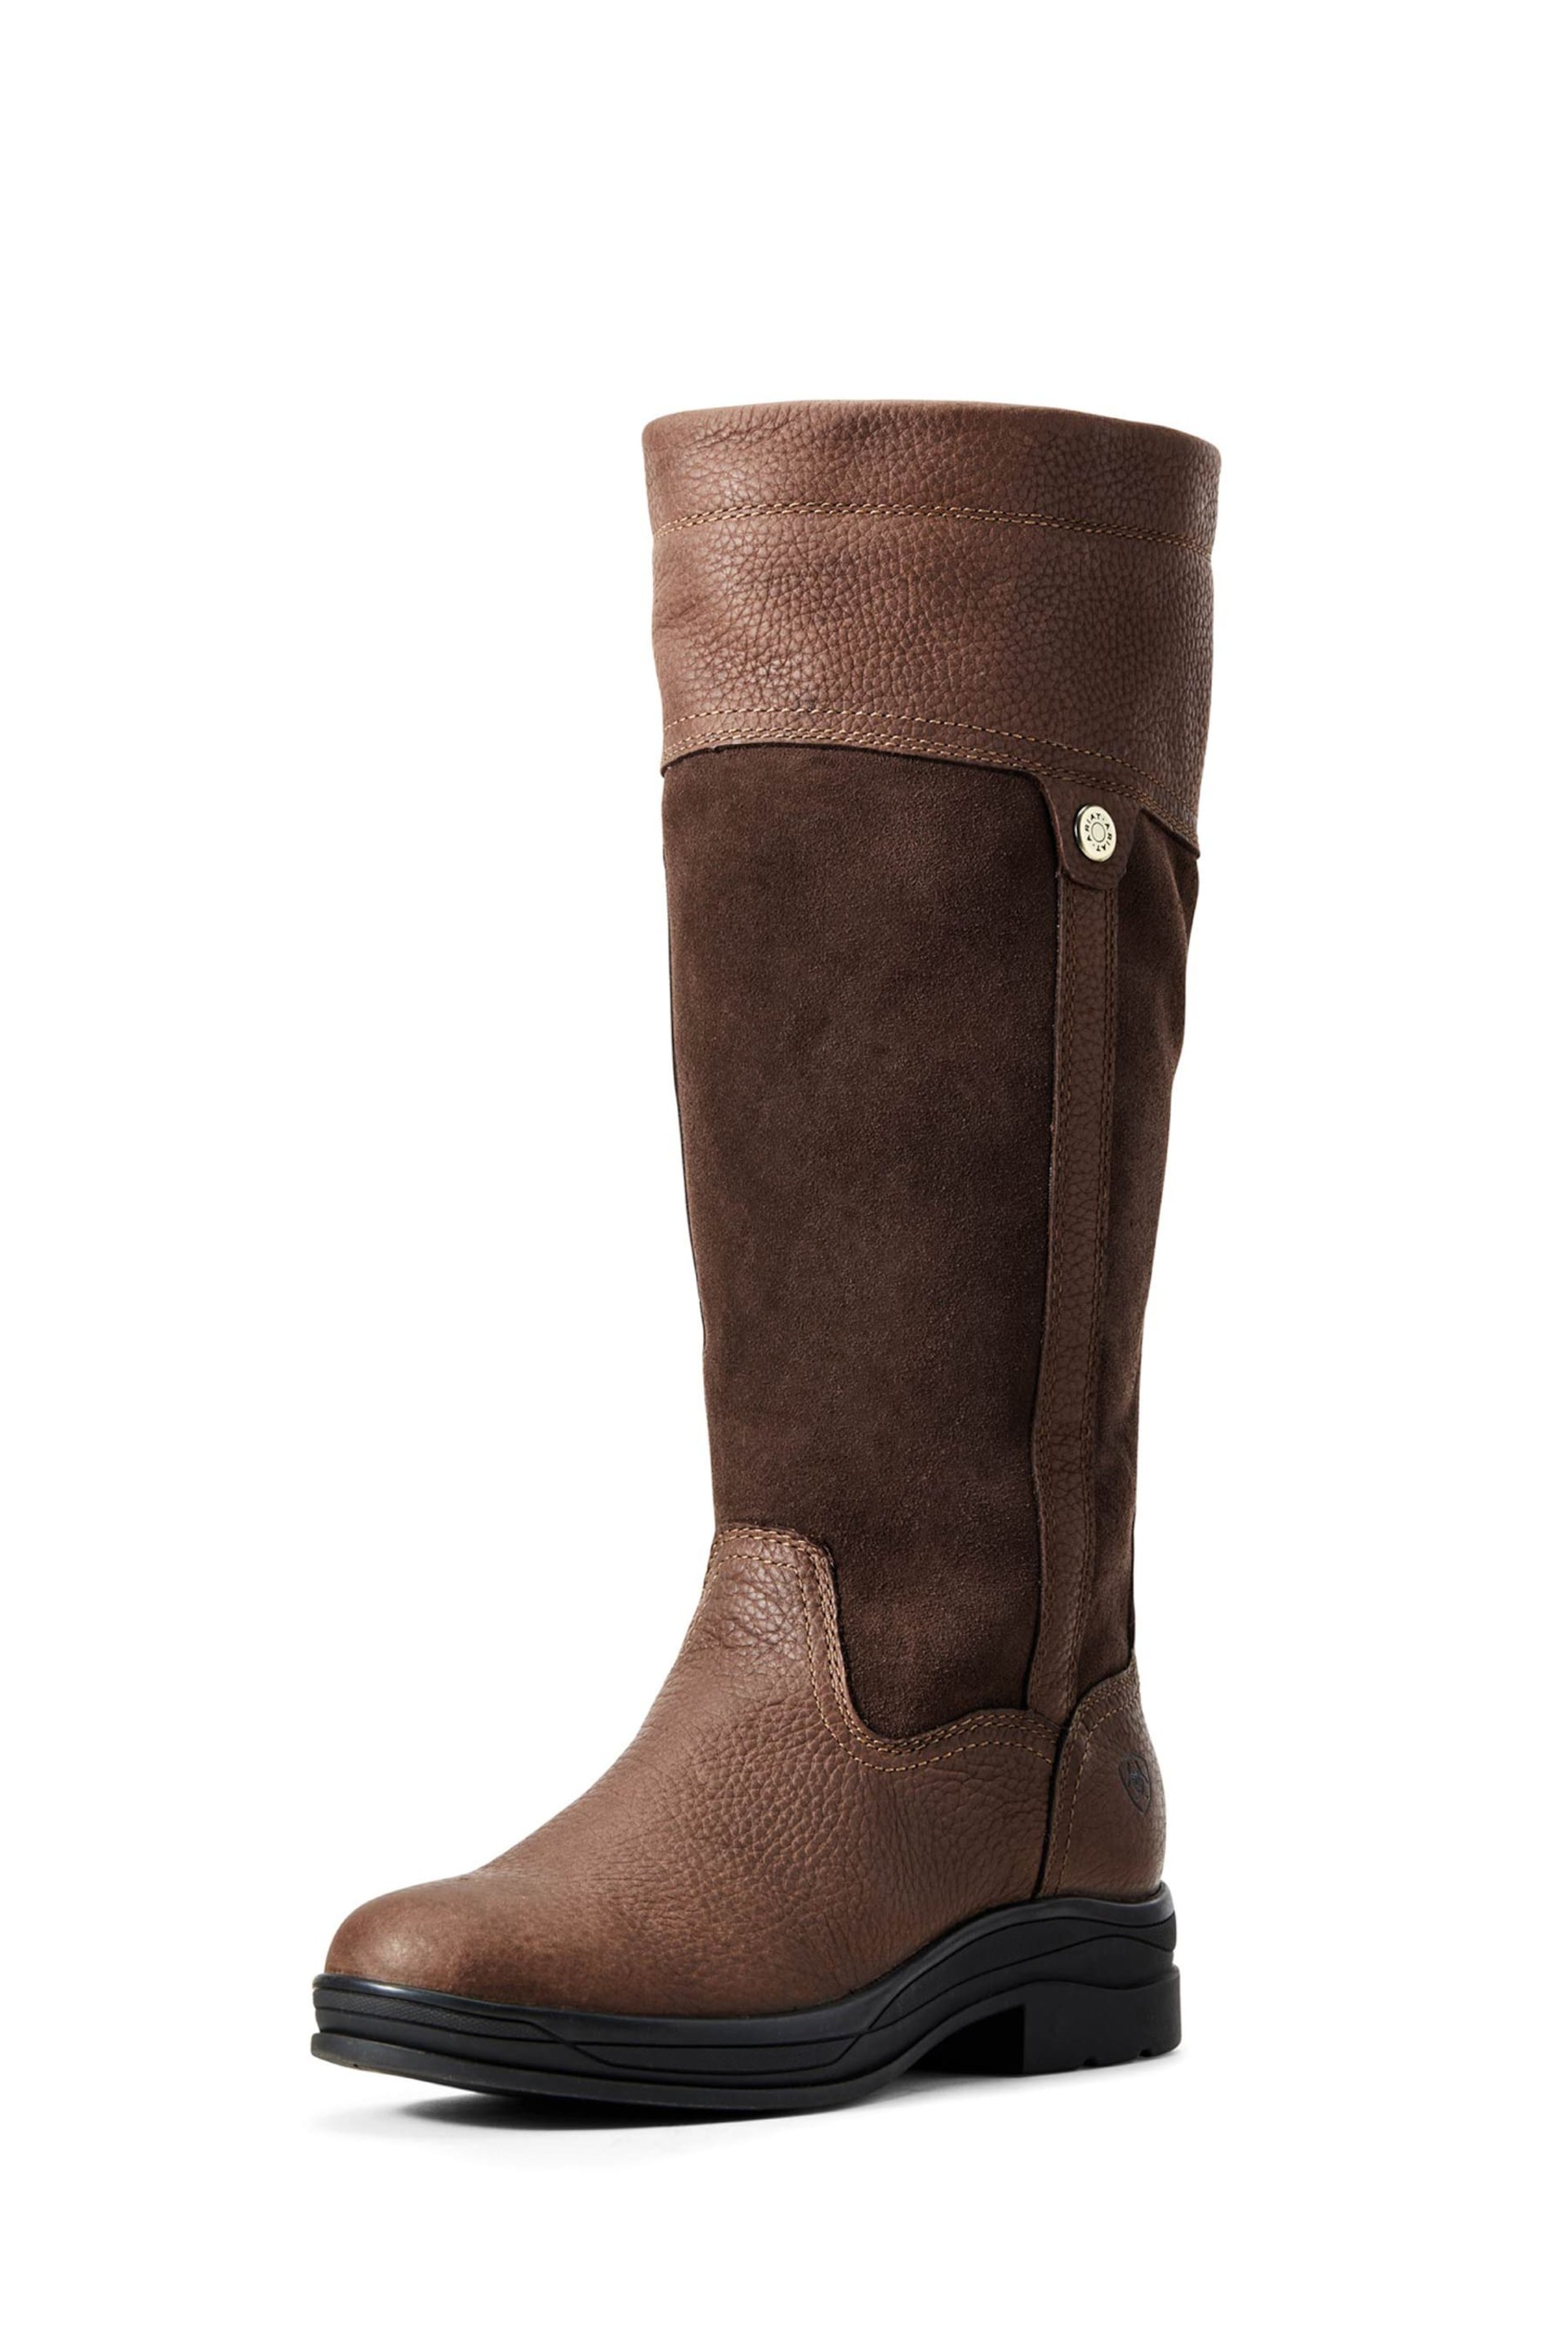 Ariat Windermere II Waterproof Brown Boots - Image 2 of 5